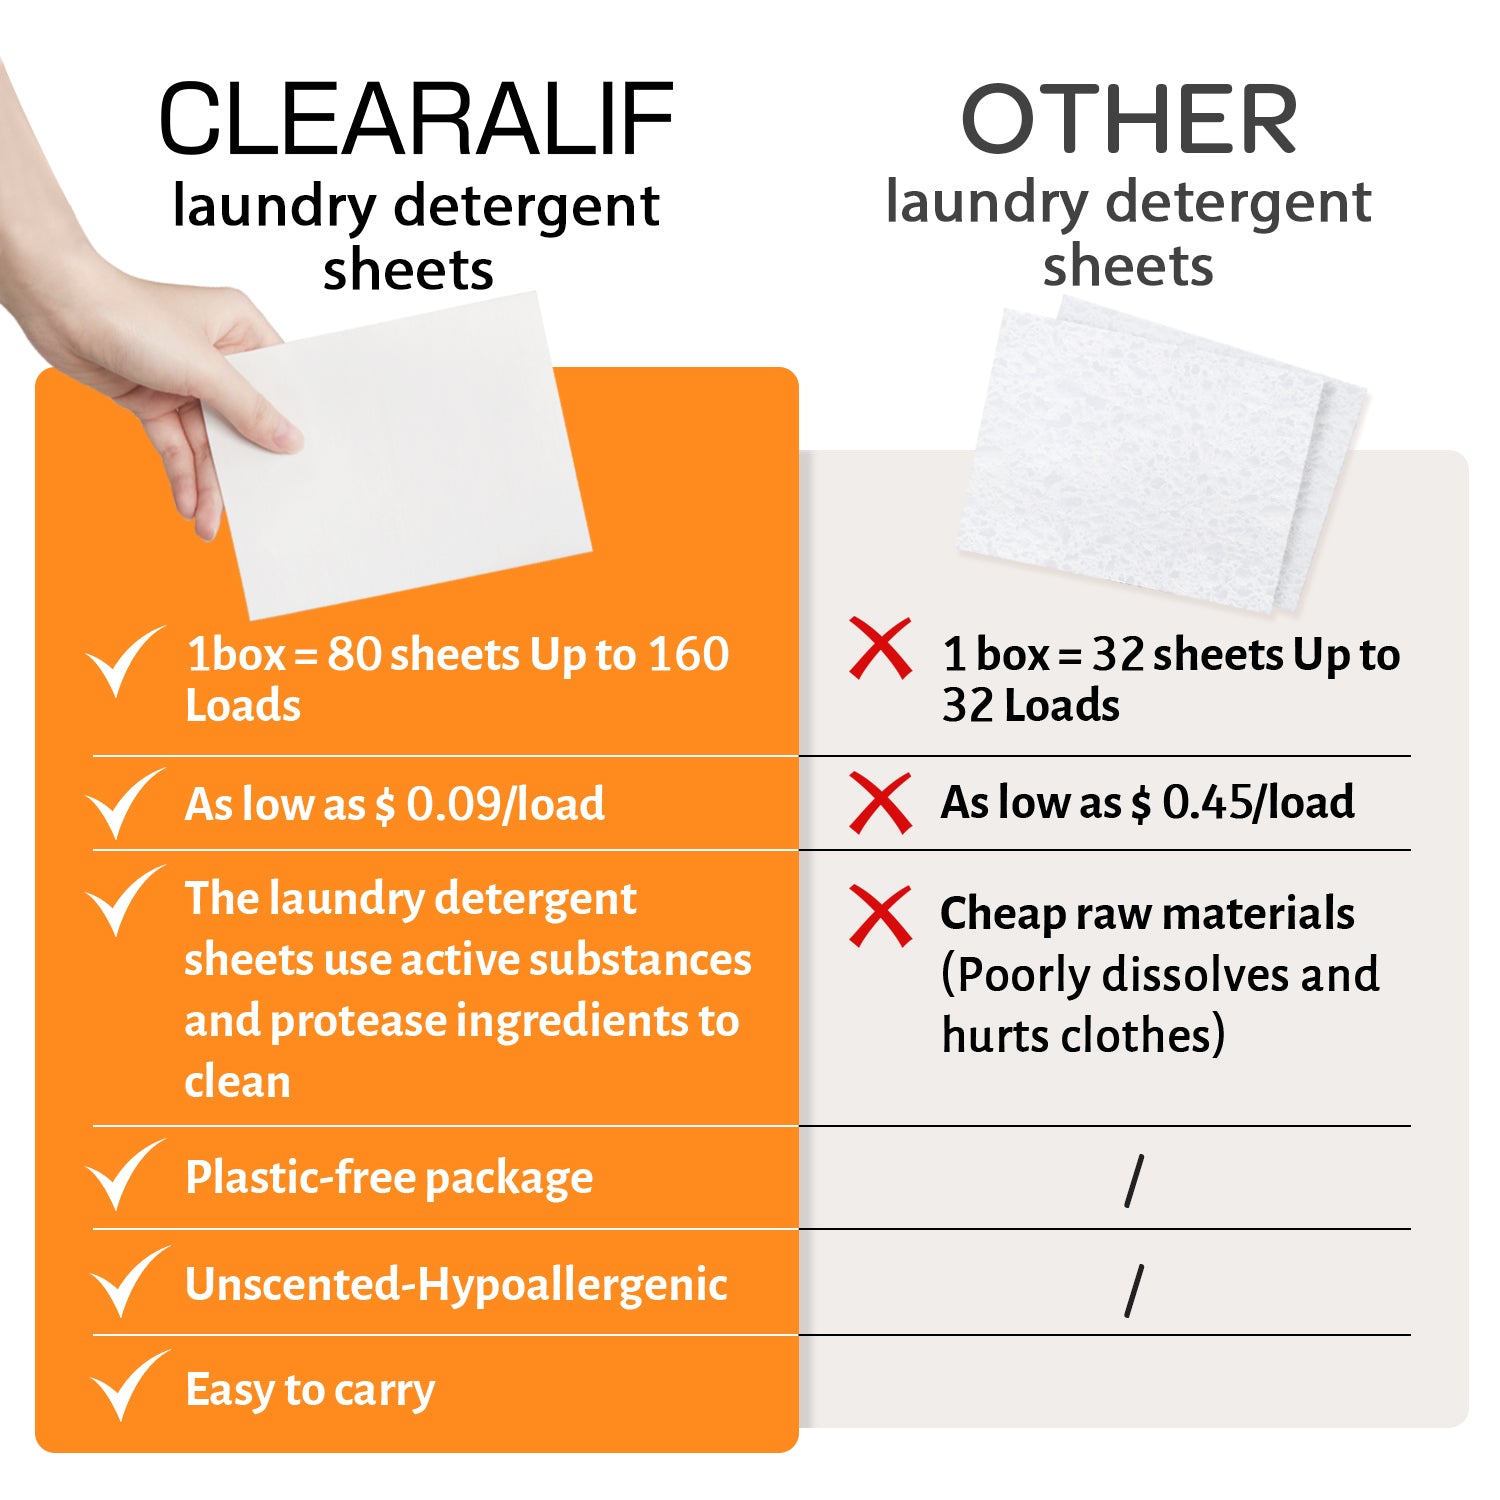 CLEARALIF Eco Friendly & Hypoallergenic Laundry Detergent 64 Loads, Sunshine Orange